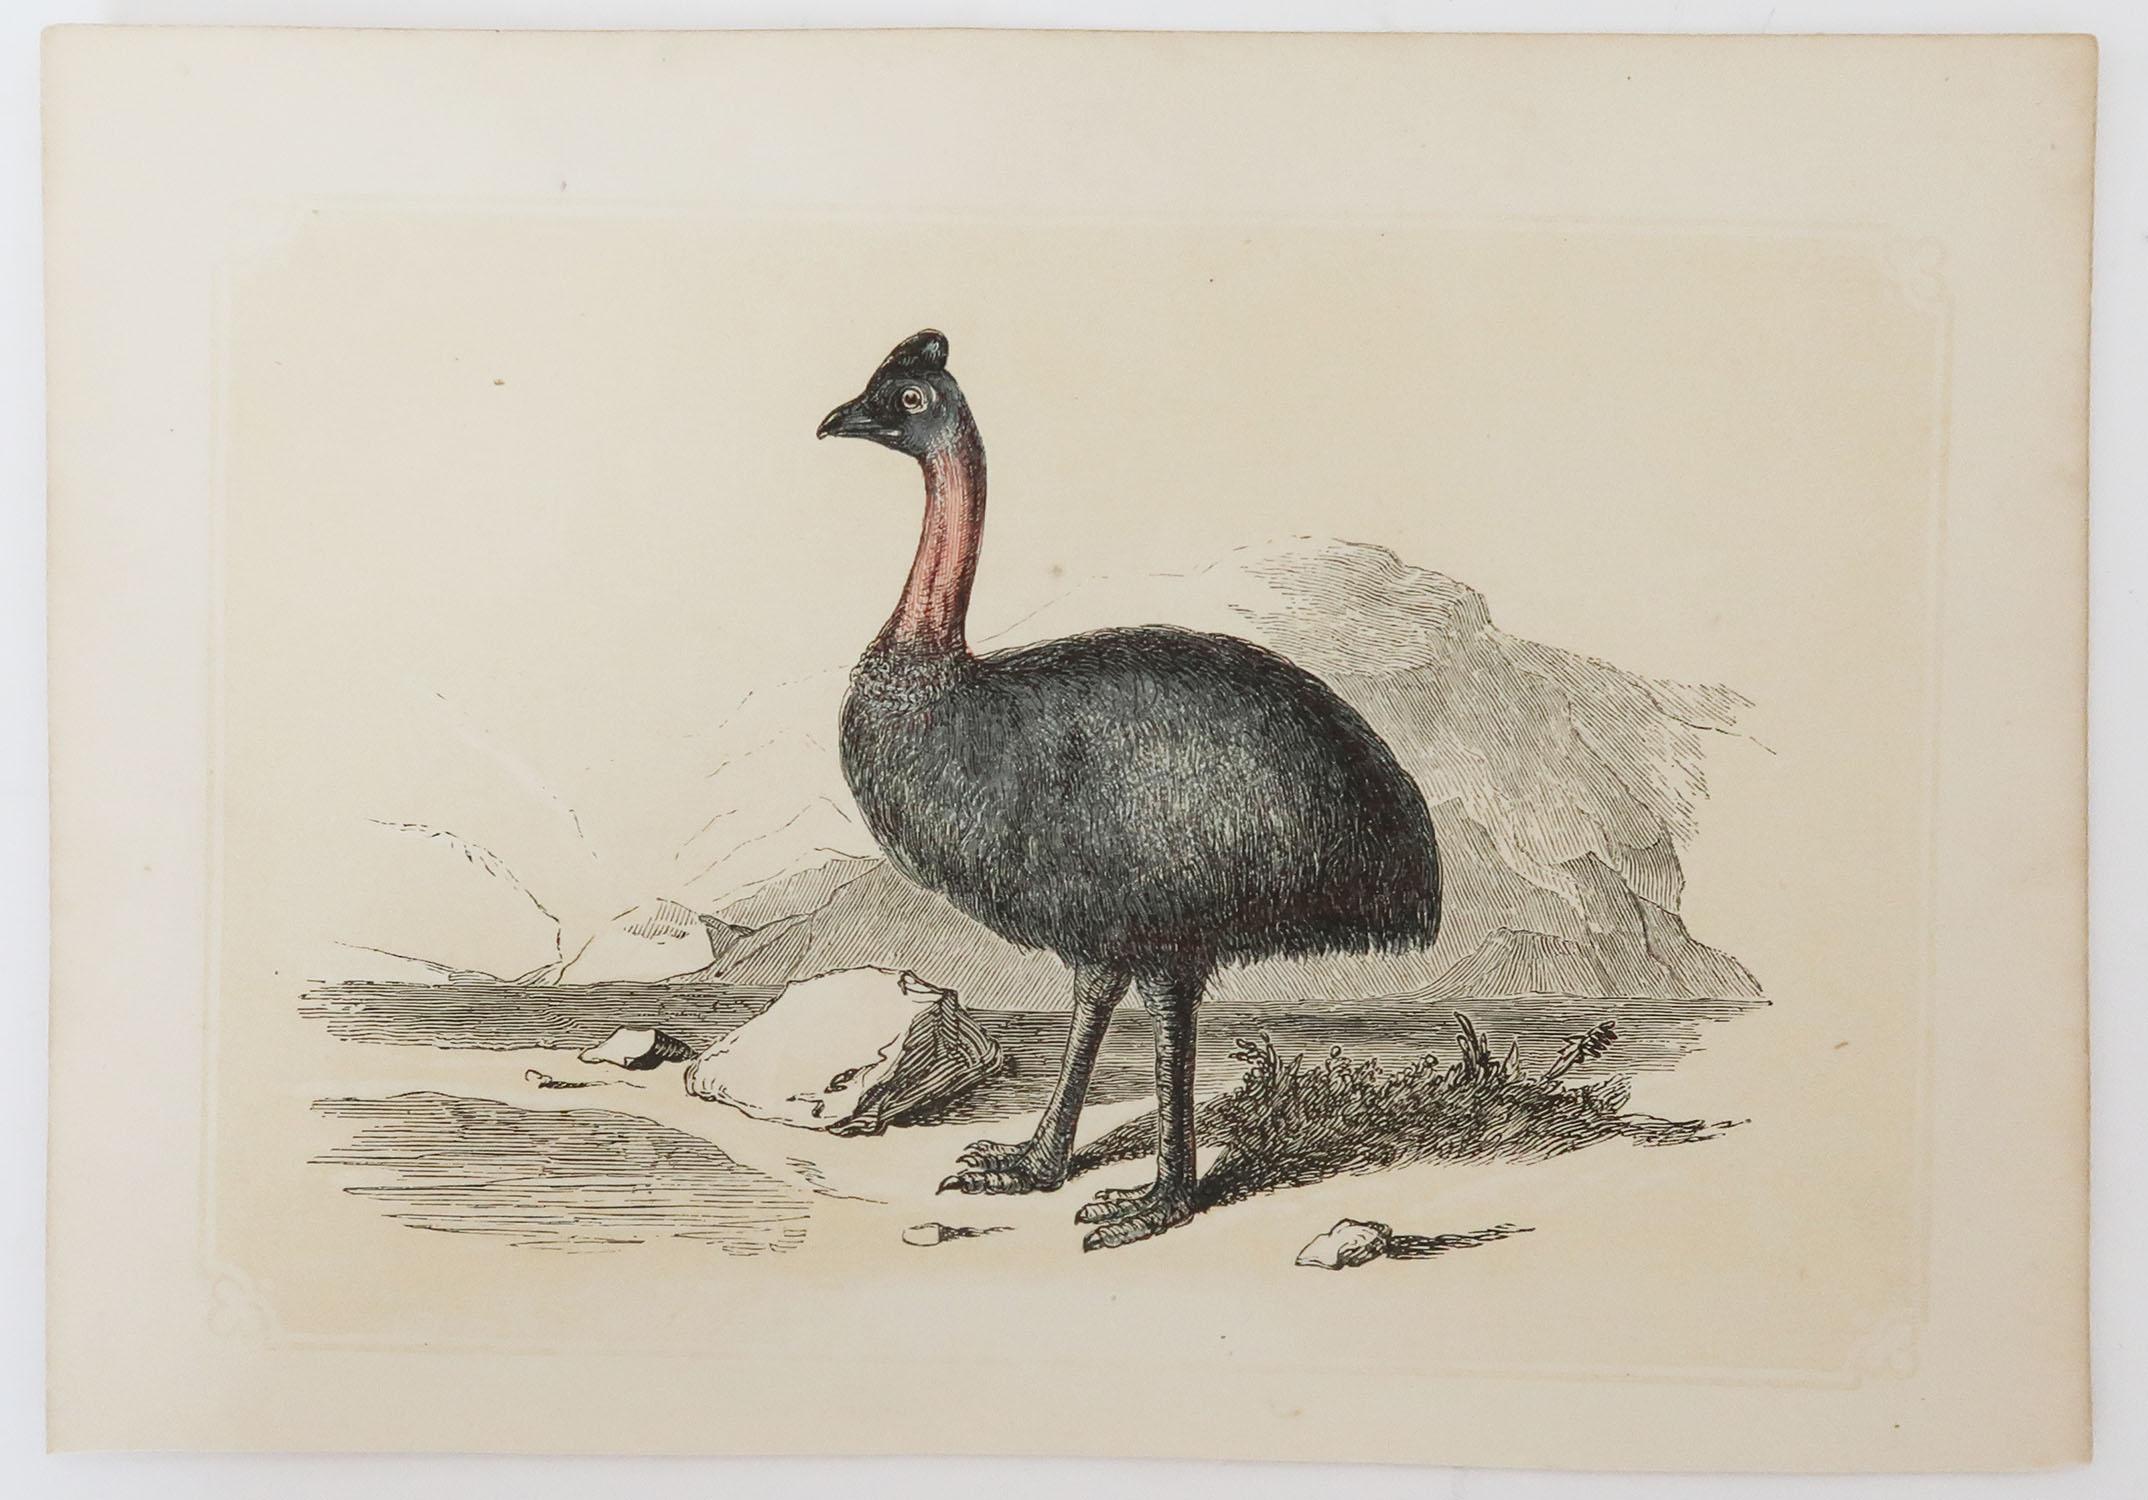 Folk Art Original Antique Bird Print, the Crested Curassow, Tallis, circa 1850